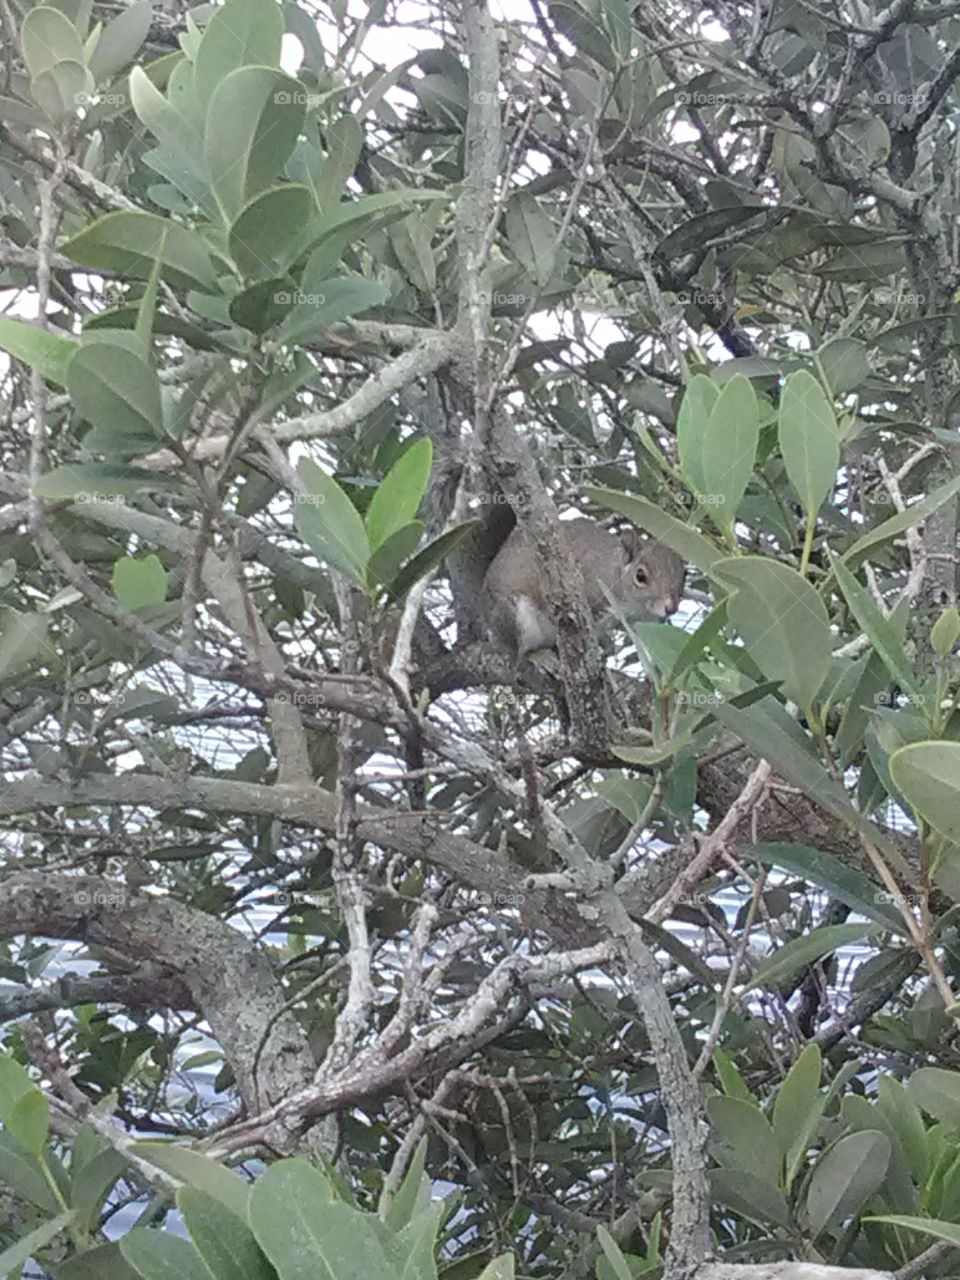 squirrel at Ballast Point Park in Tampa FL